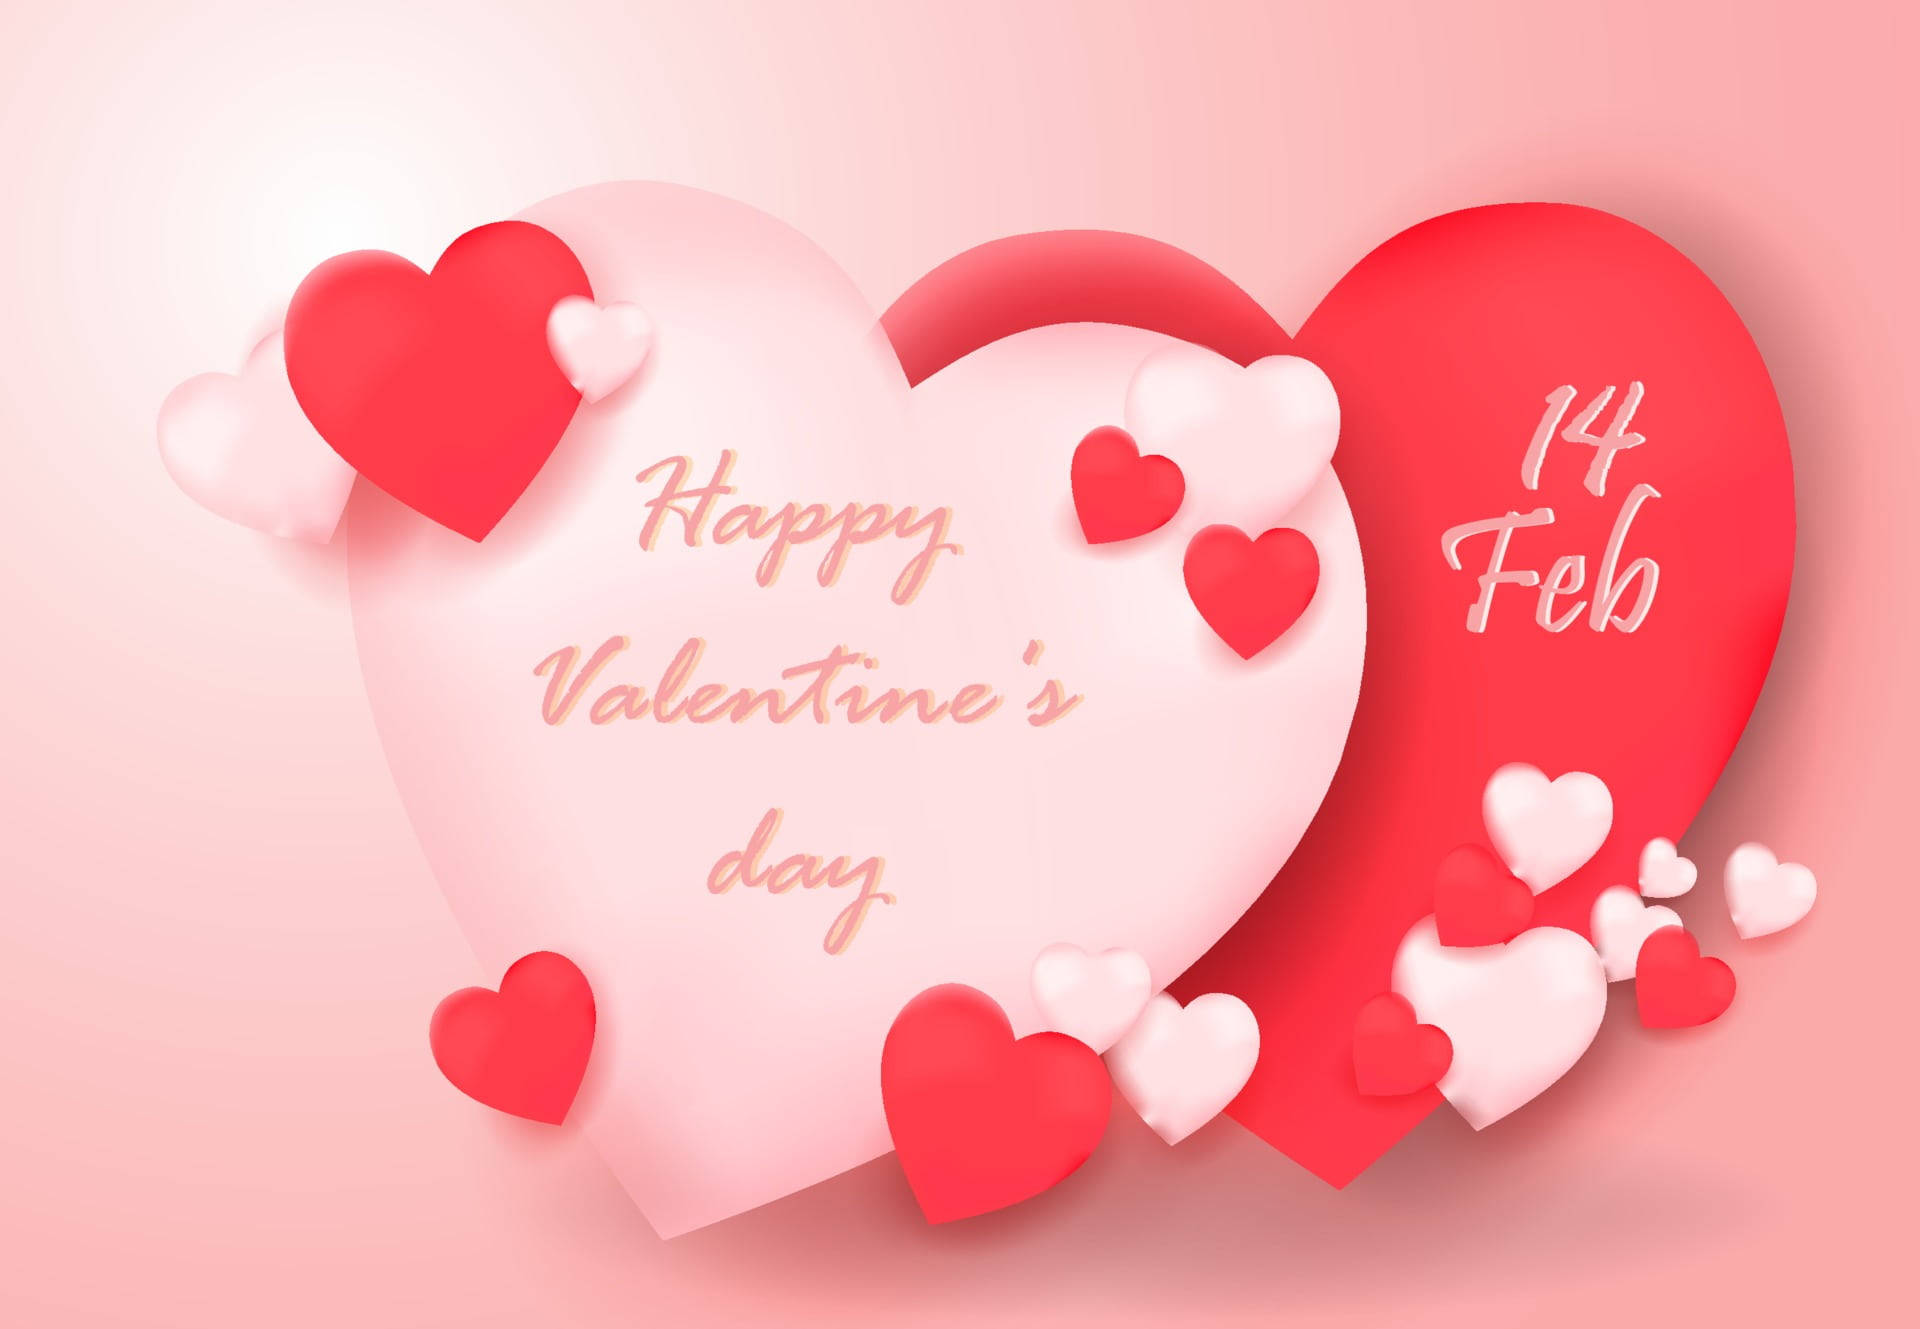 Happy Valentine’s Day 14 Feb